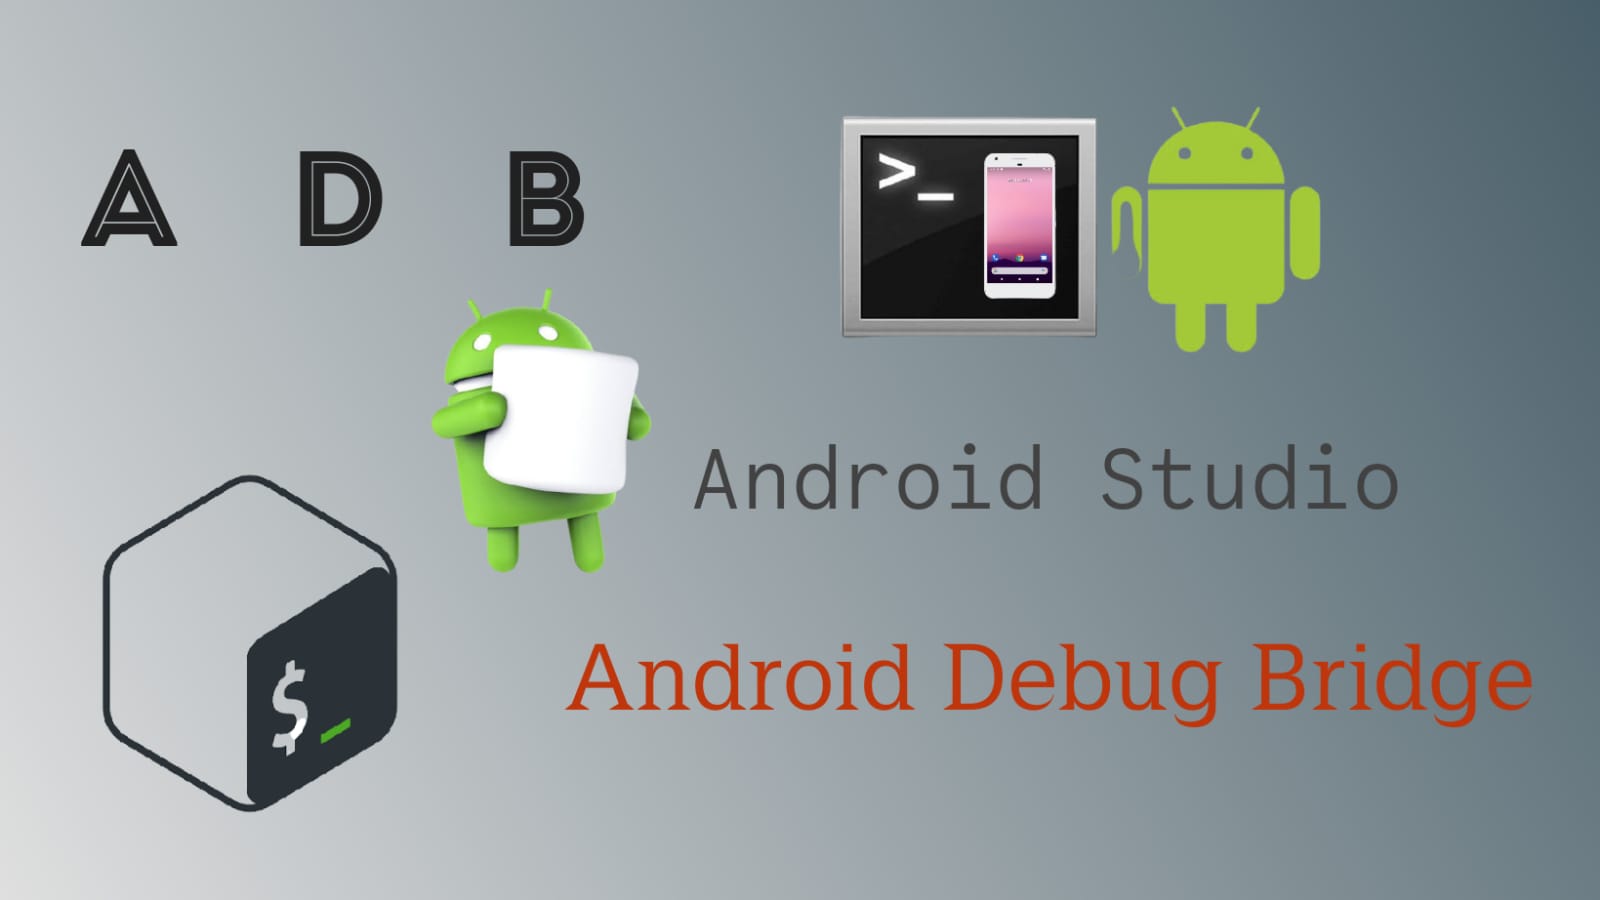 ADB In Android Studio | Android Debug Bridge